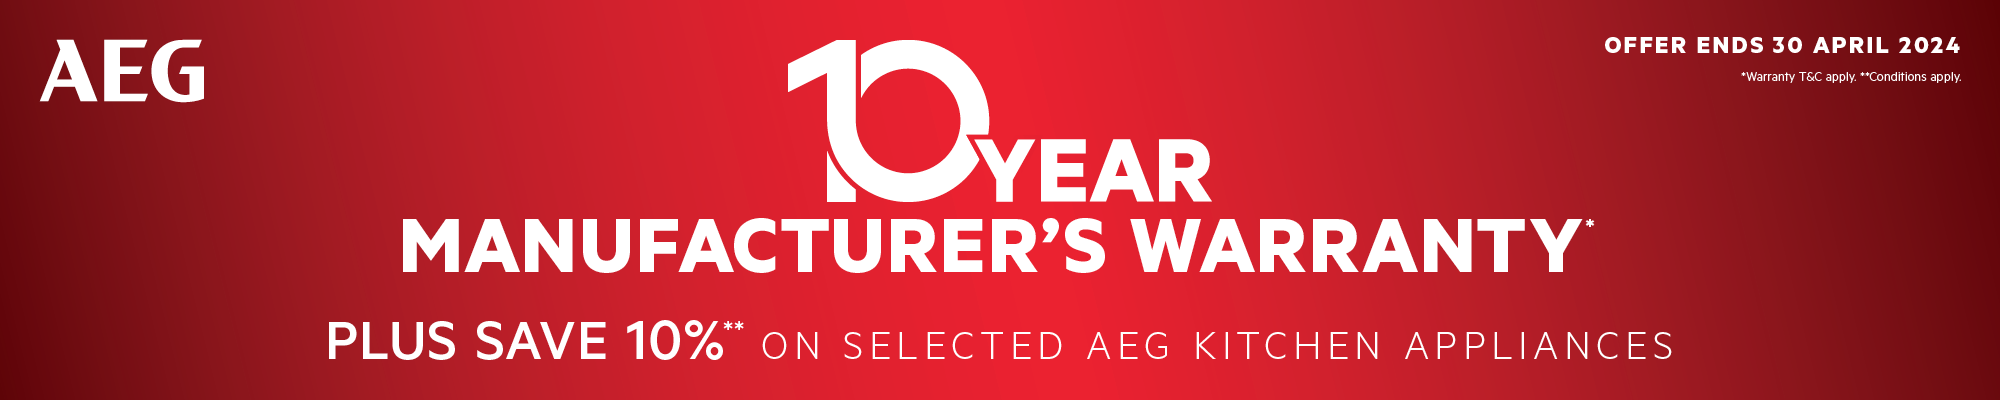 10 Year AEG Manufacturer's Warranty Plus Save 10%*